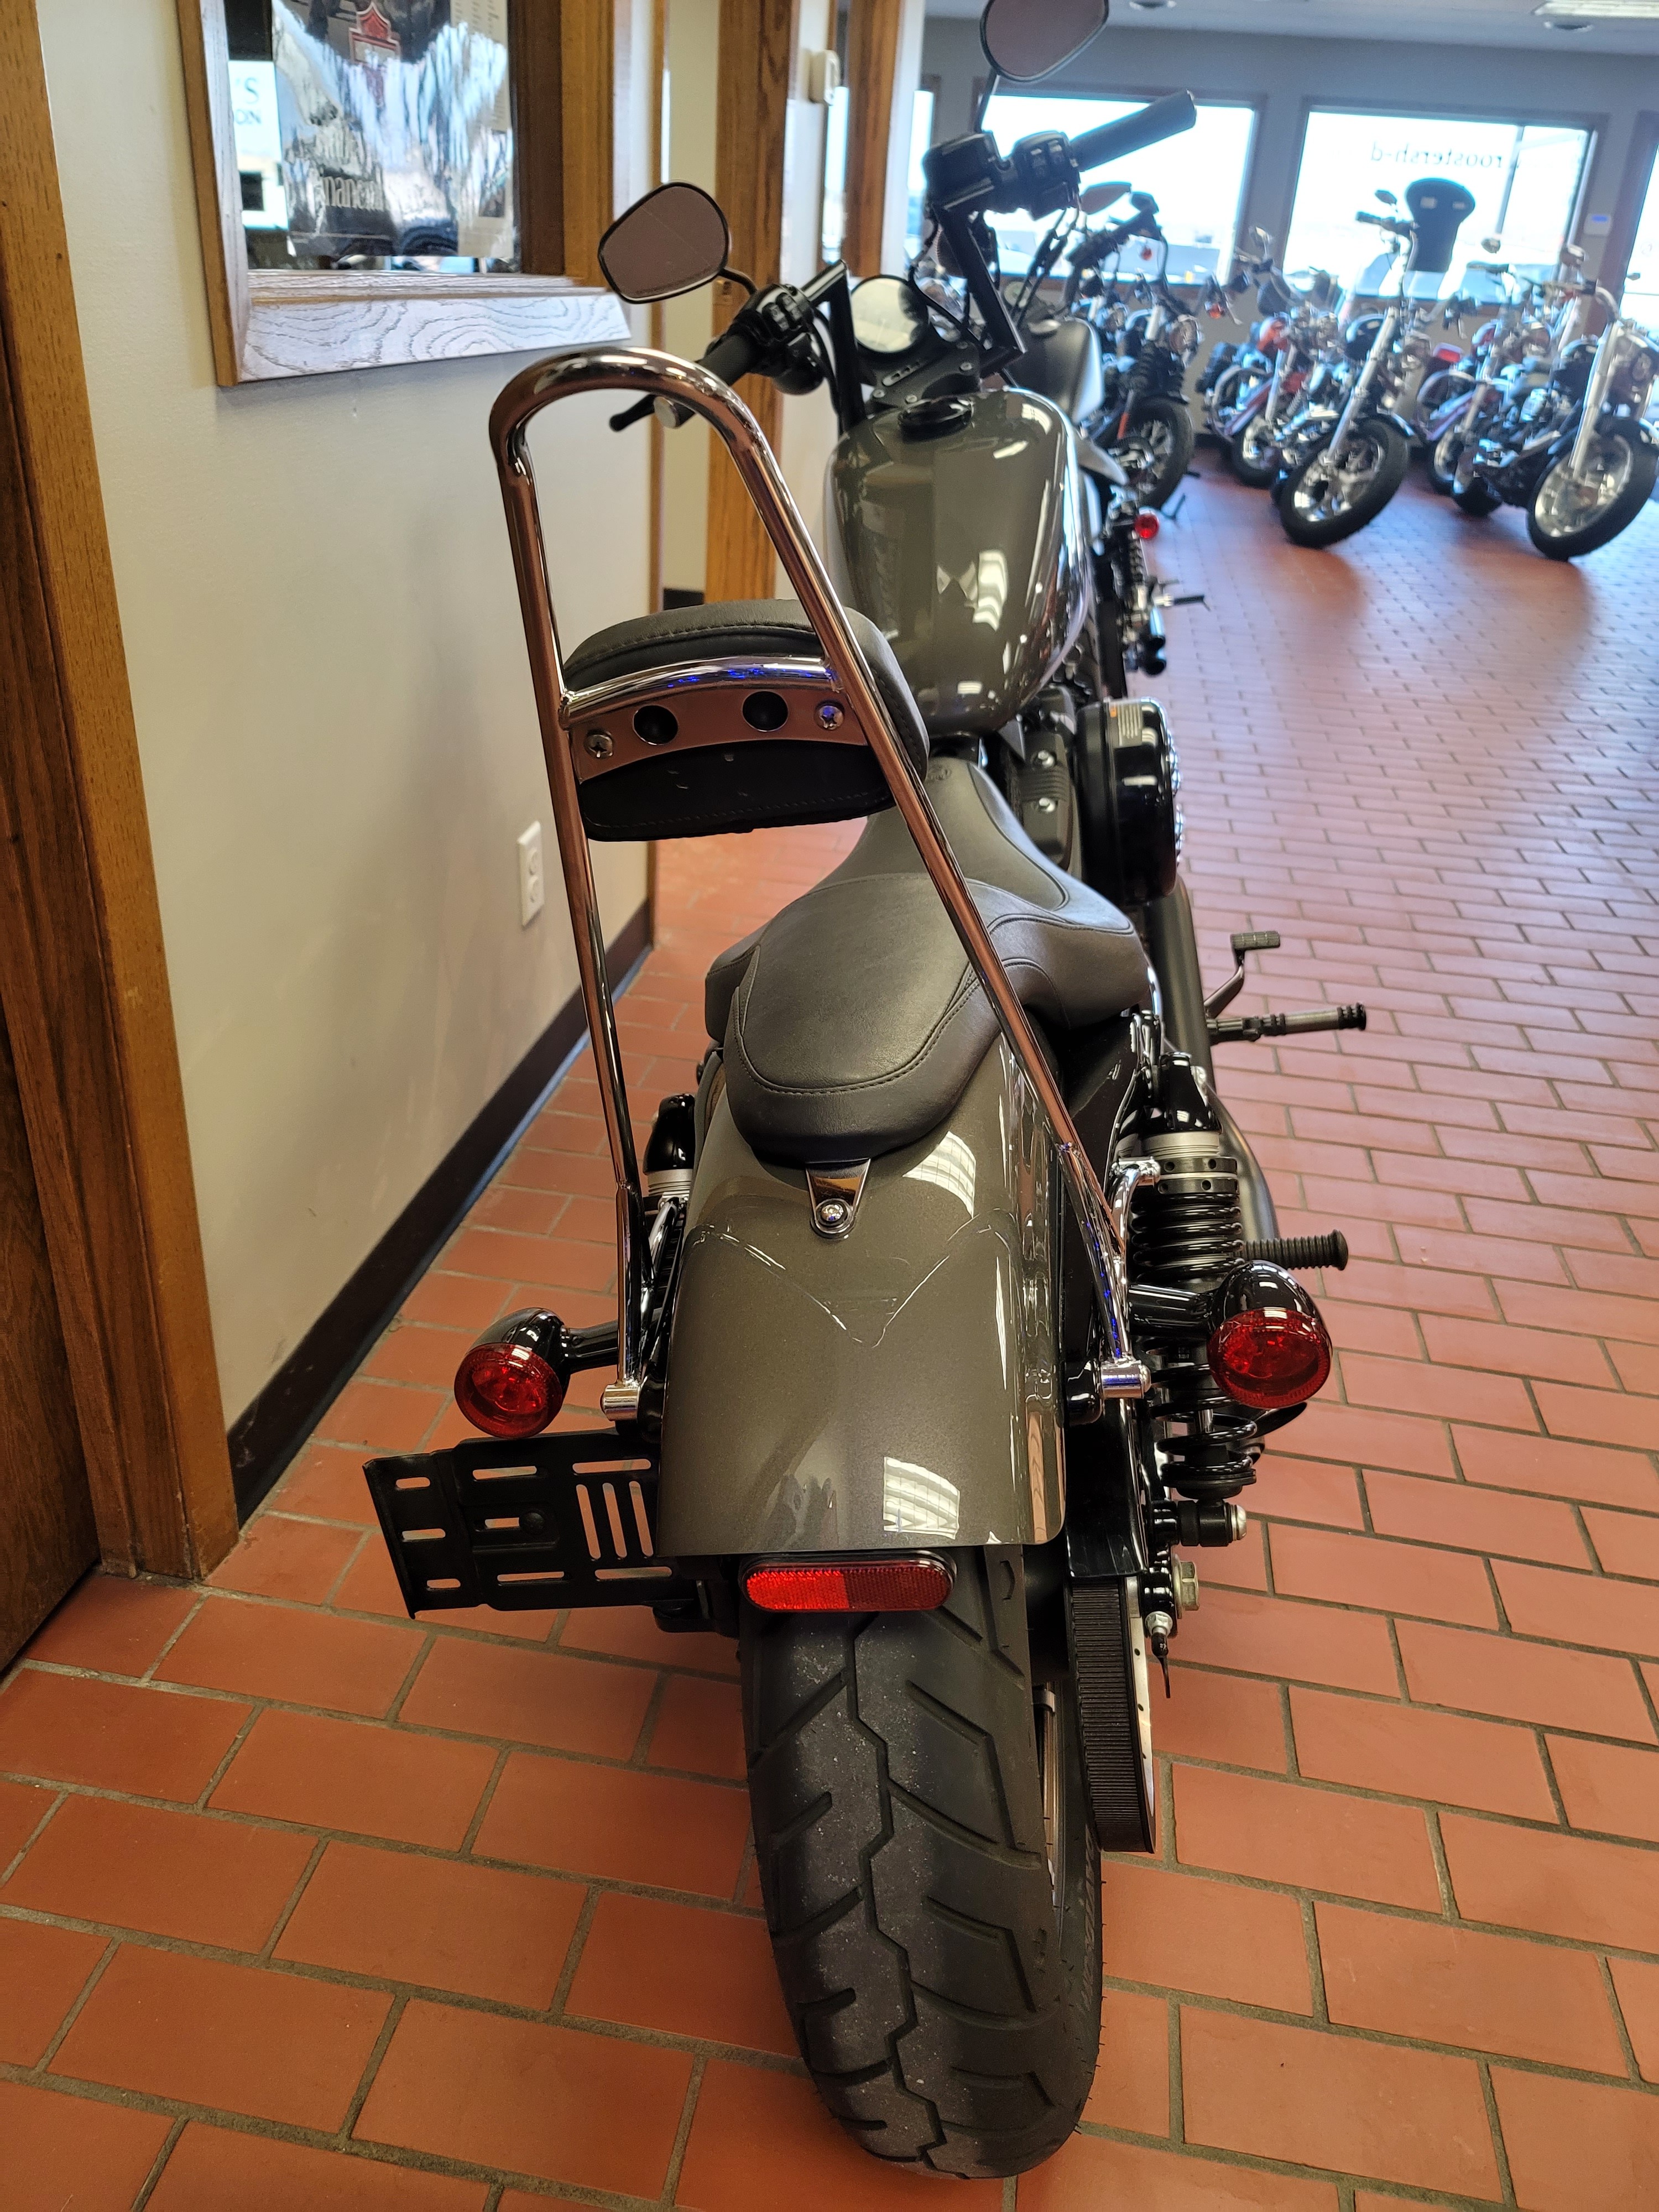 2019 Harley-Davidson Sportster Iron 883 at Rooster's Harley Davidson